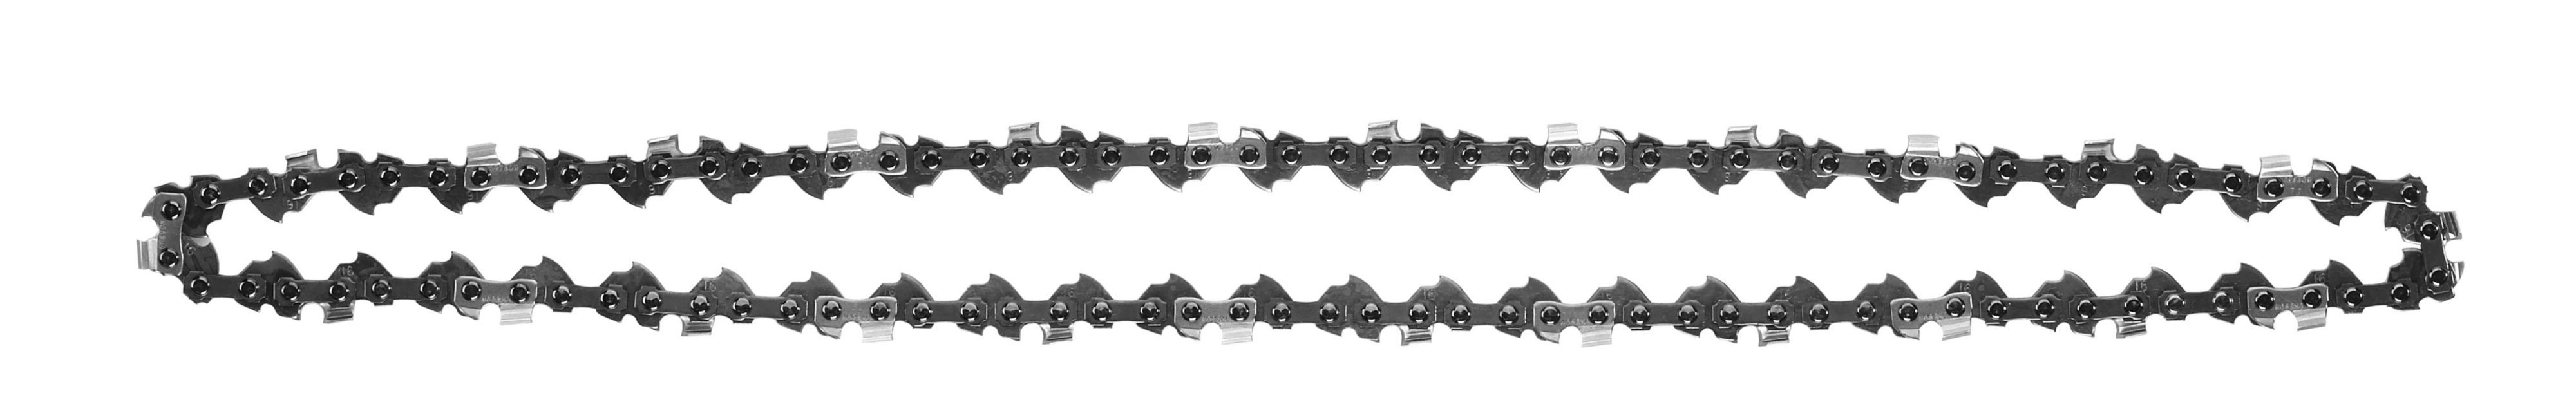 Ryobi RAC221 Chainsaw chain